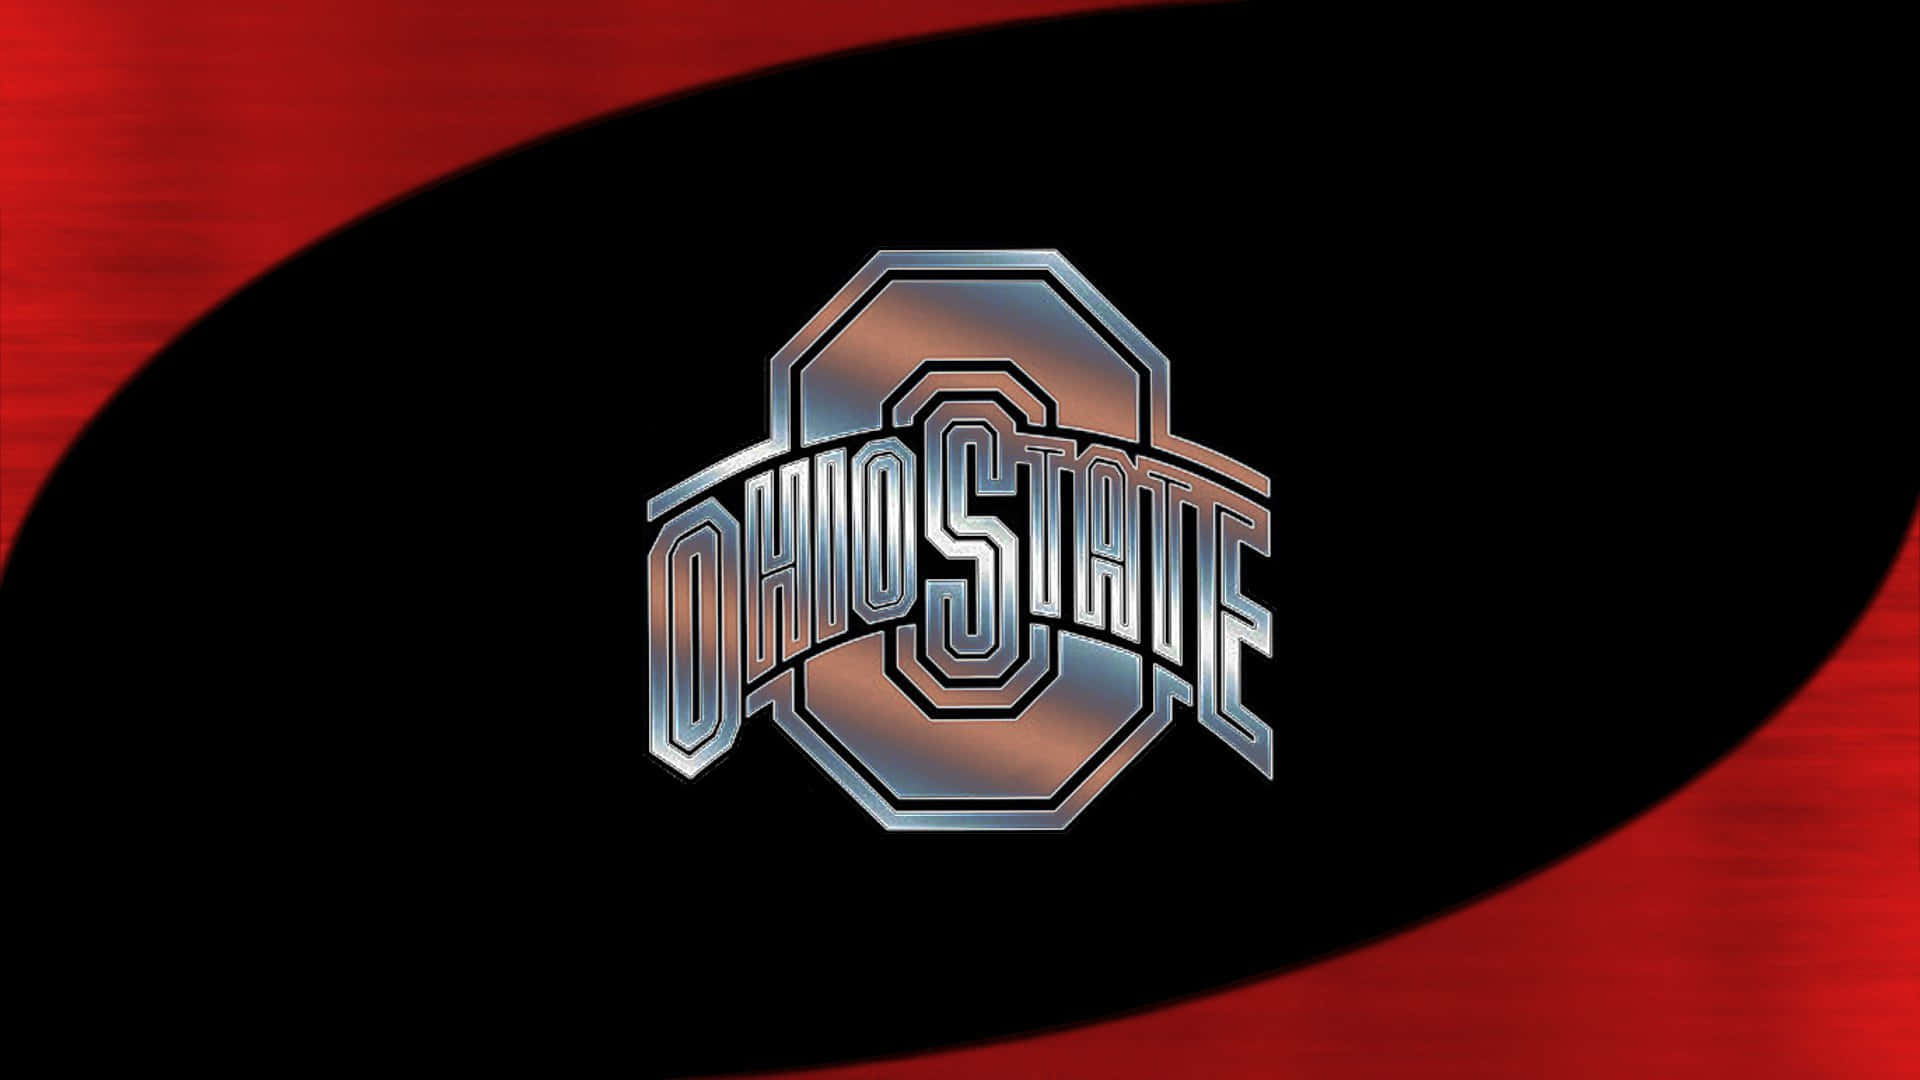 Ohio State-logo 1920 X 1080 Wallpaper